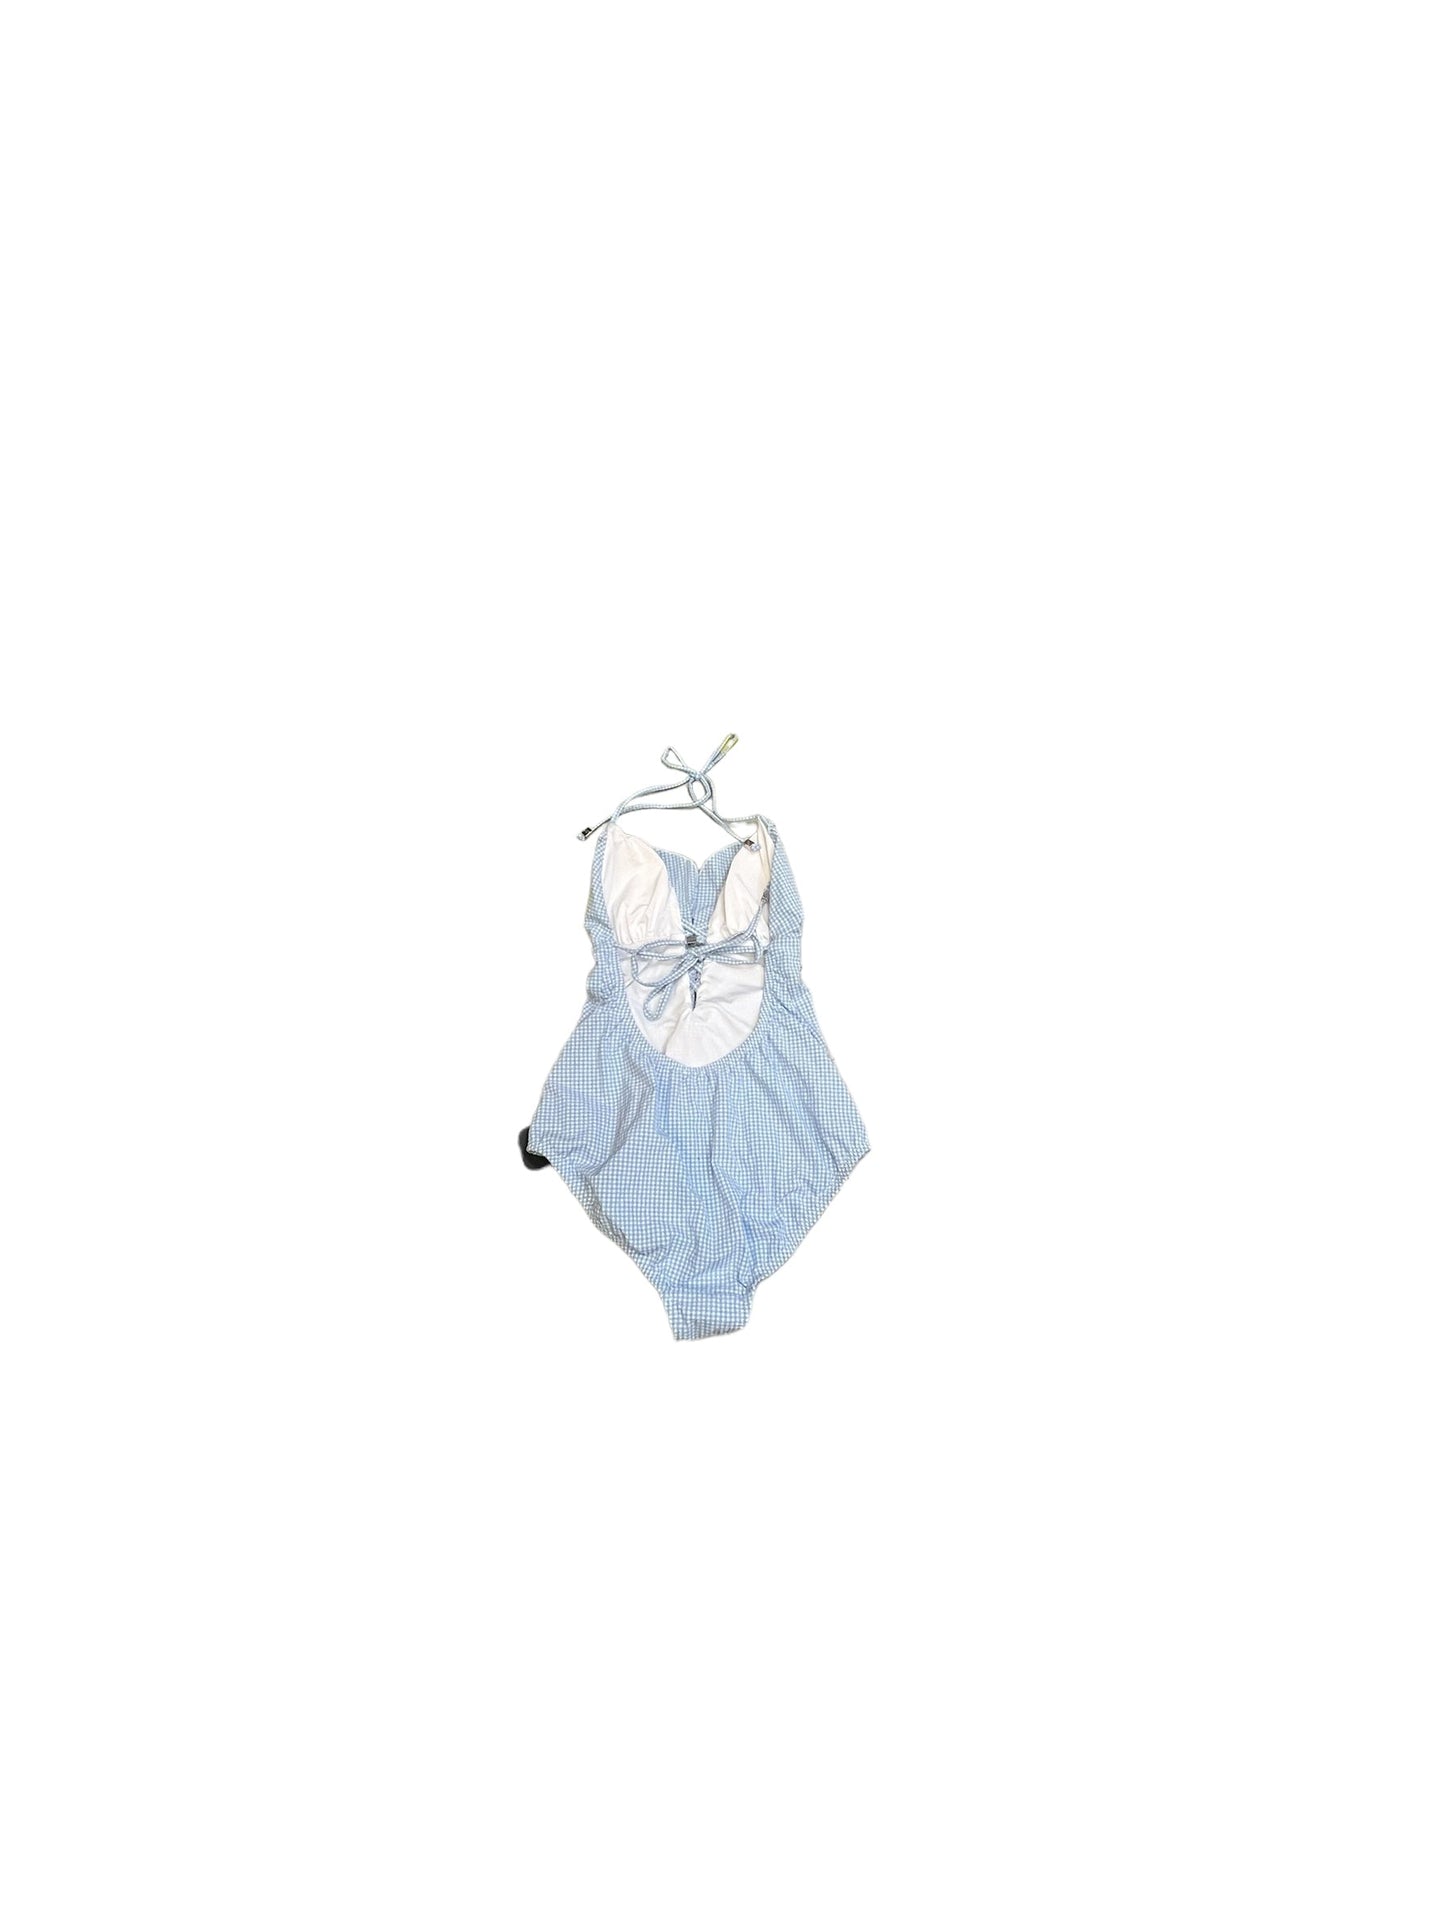 Swimsuit By Shosanna  Size: S